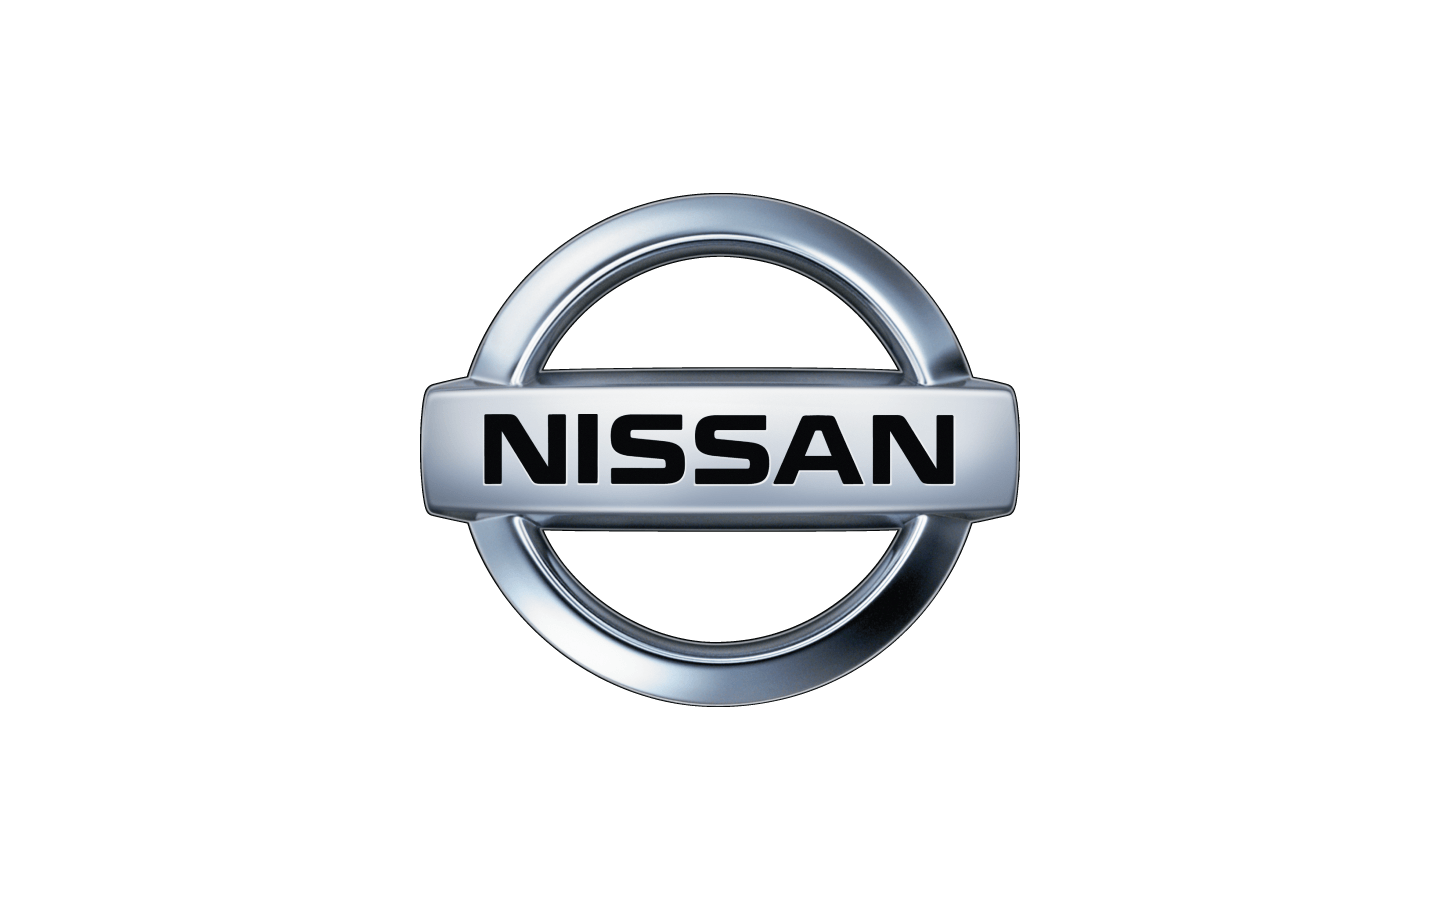 Nissan fairlady z logo free vector download